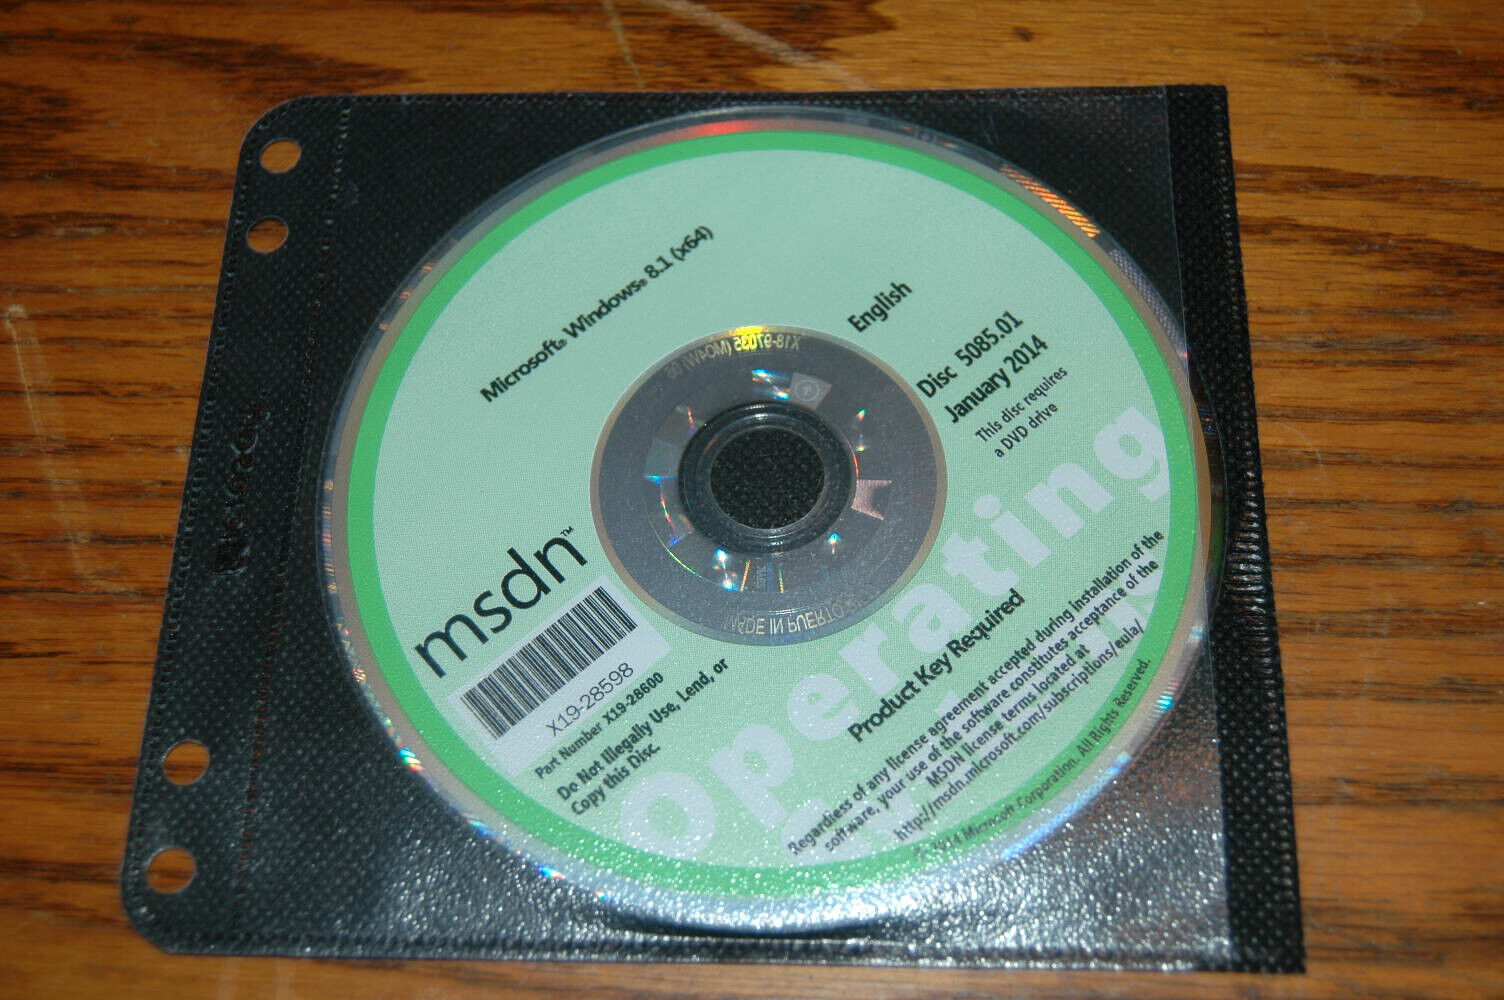 Microsoft Msdn Windows 8.1 X64 Disc 5085.01 Januray 2014 English